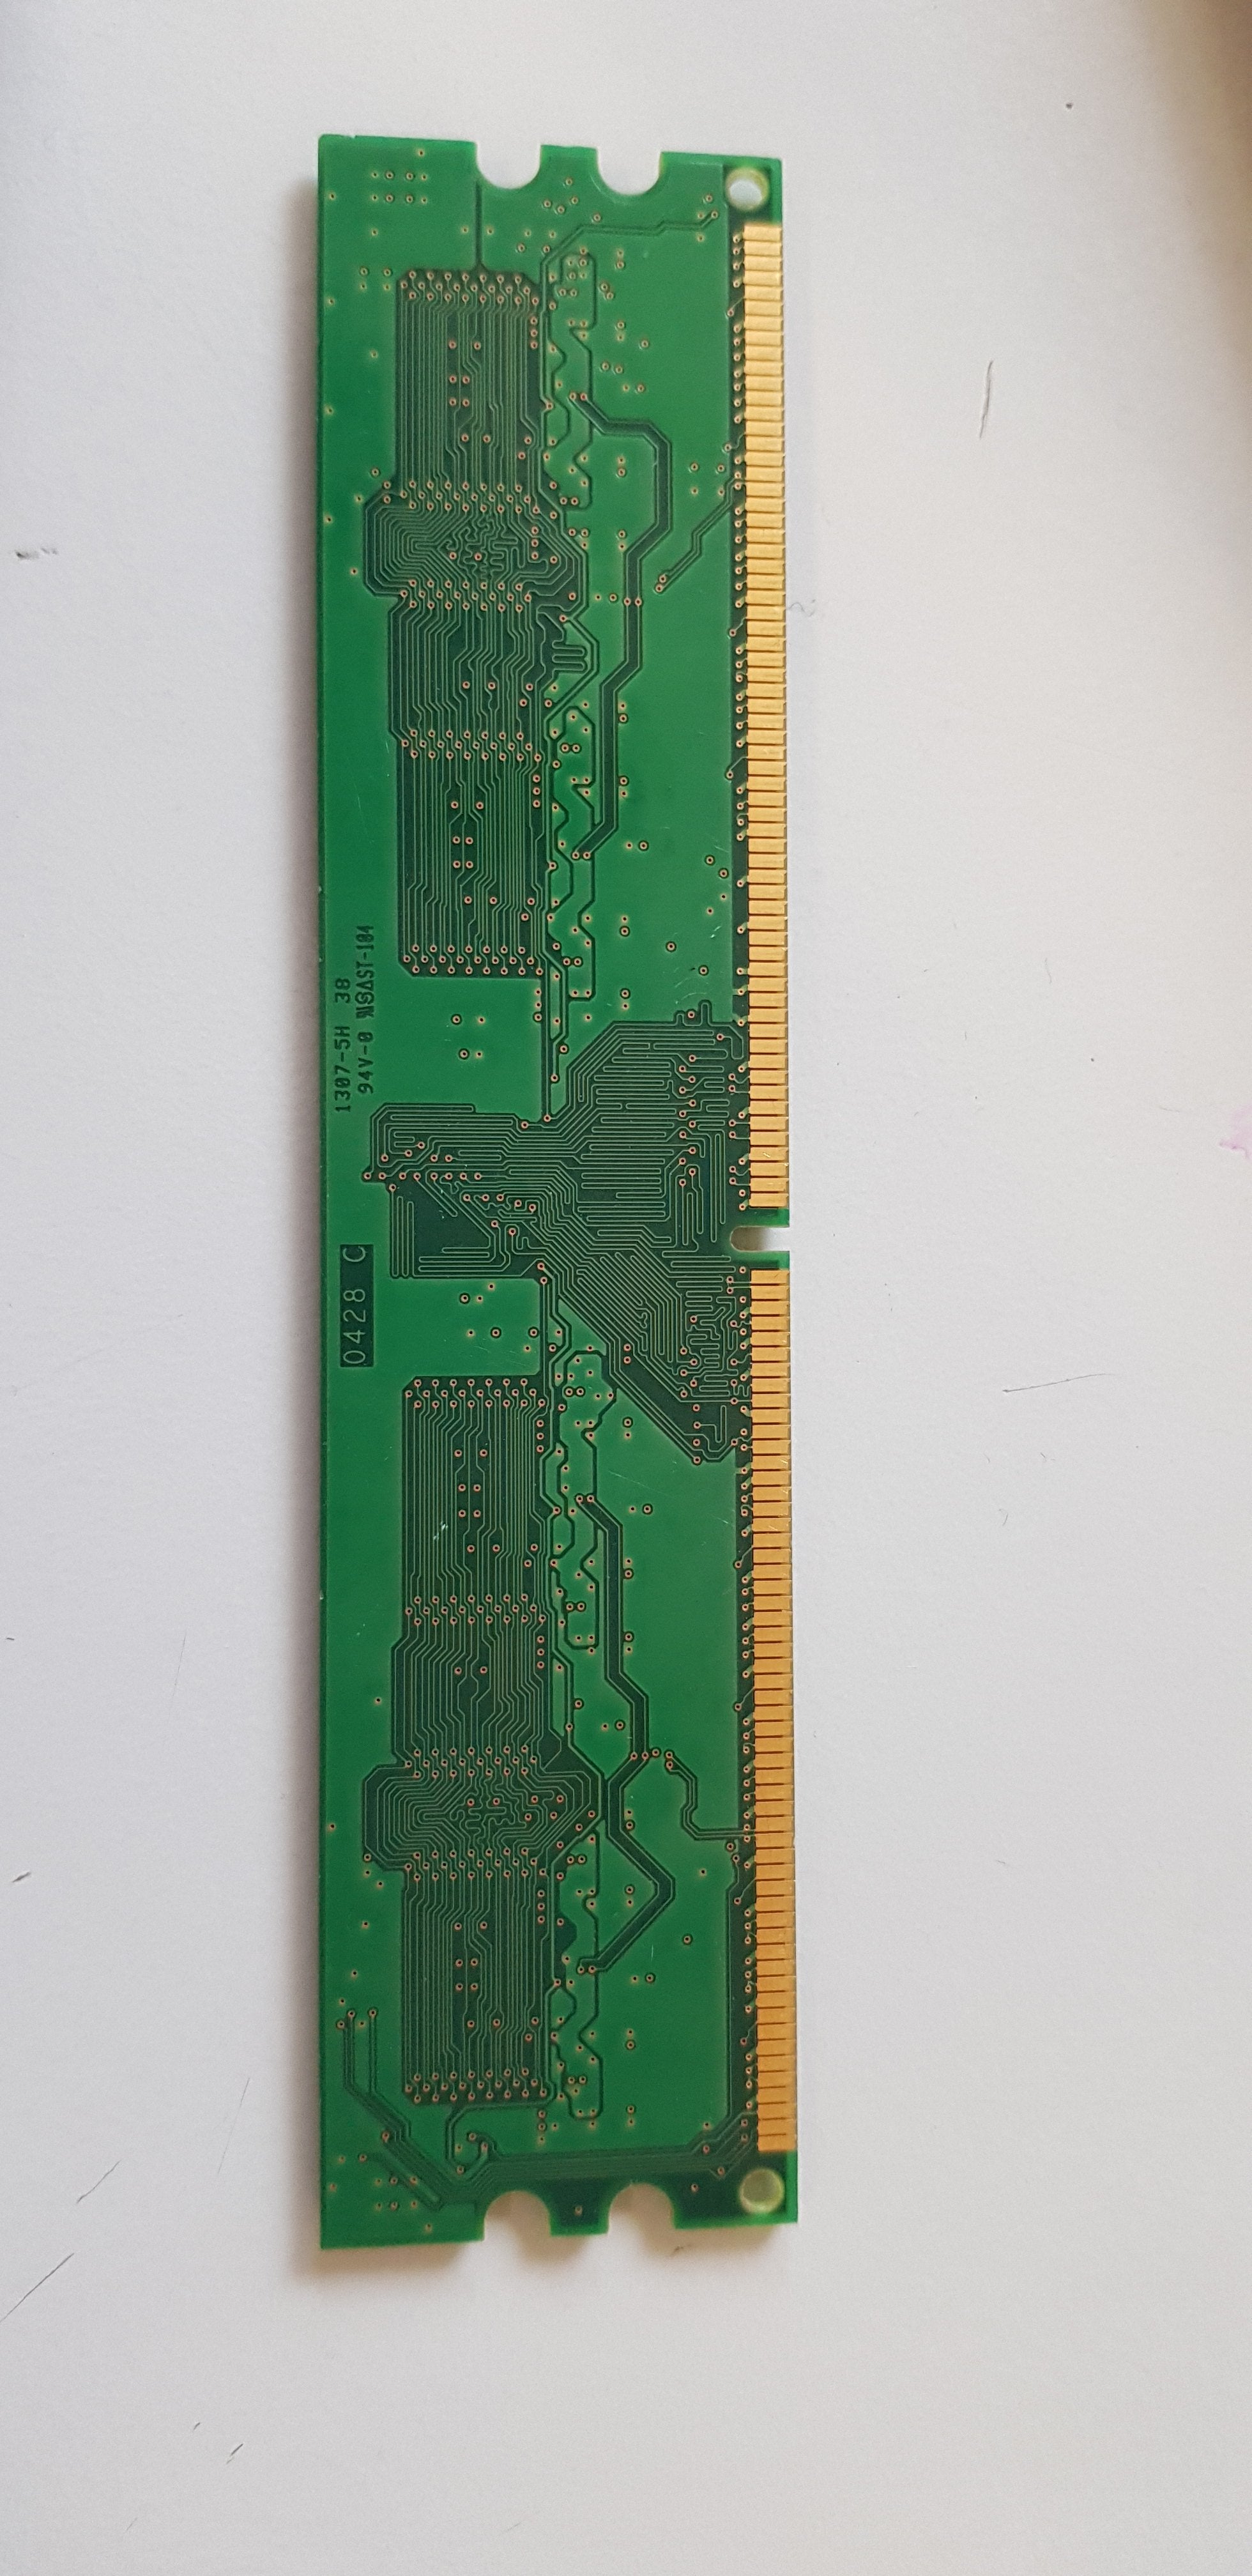 Micron 512MB 1Rx8 PC2-5300U 240Pin DDR2 SDRAM UDIMM Memory Module (MT8HTF6464AY-667D7)